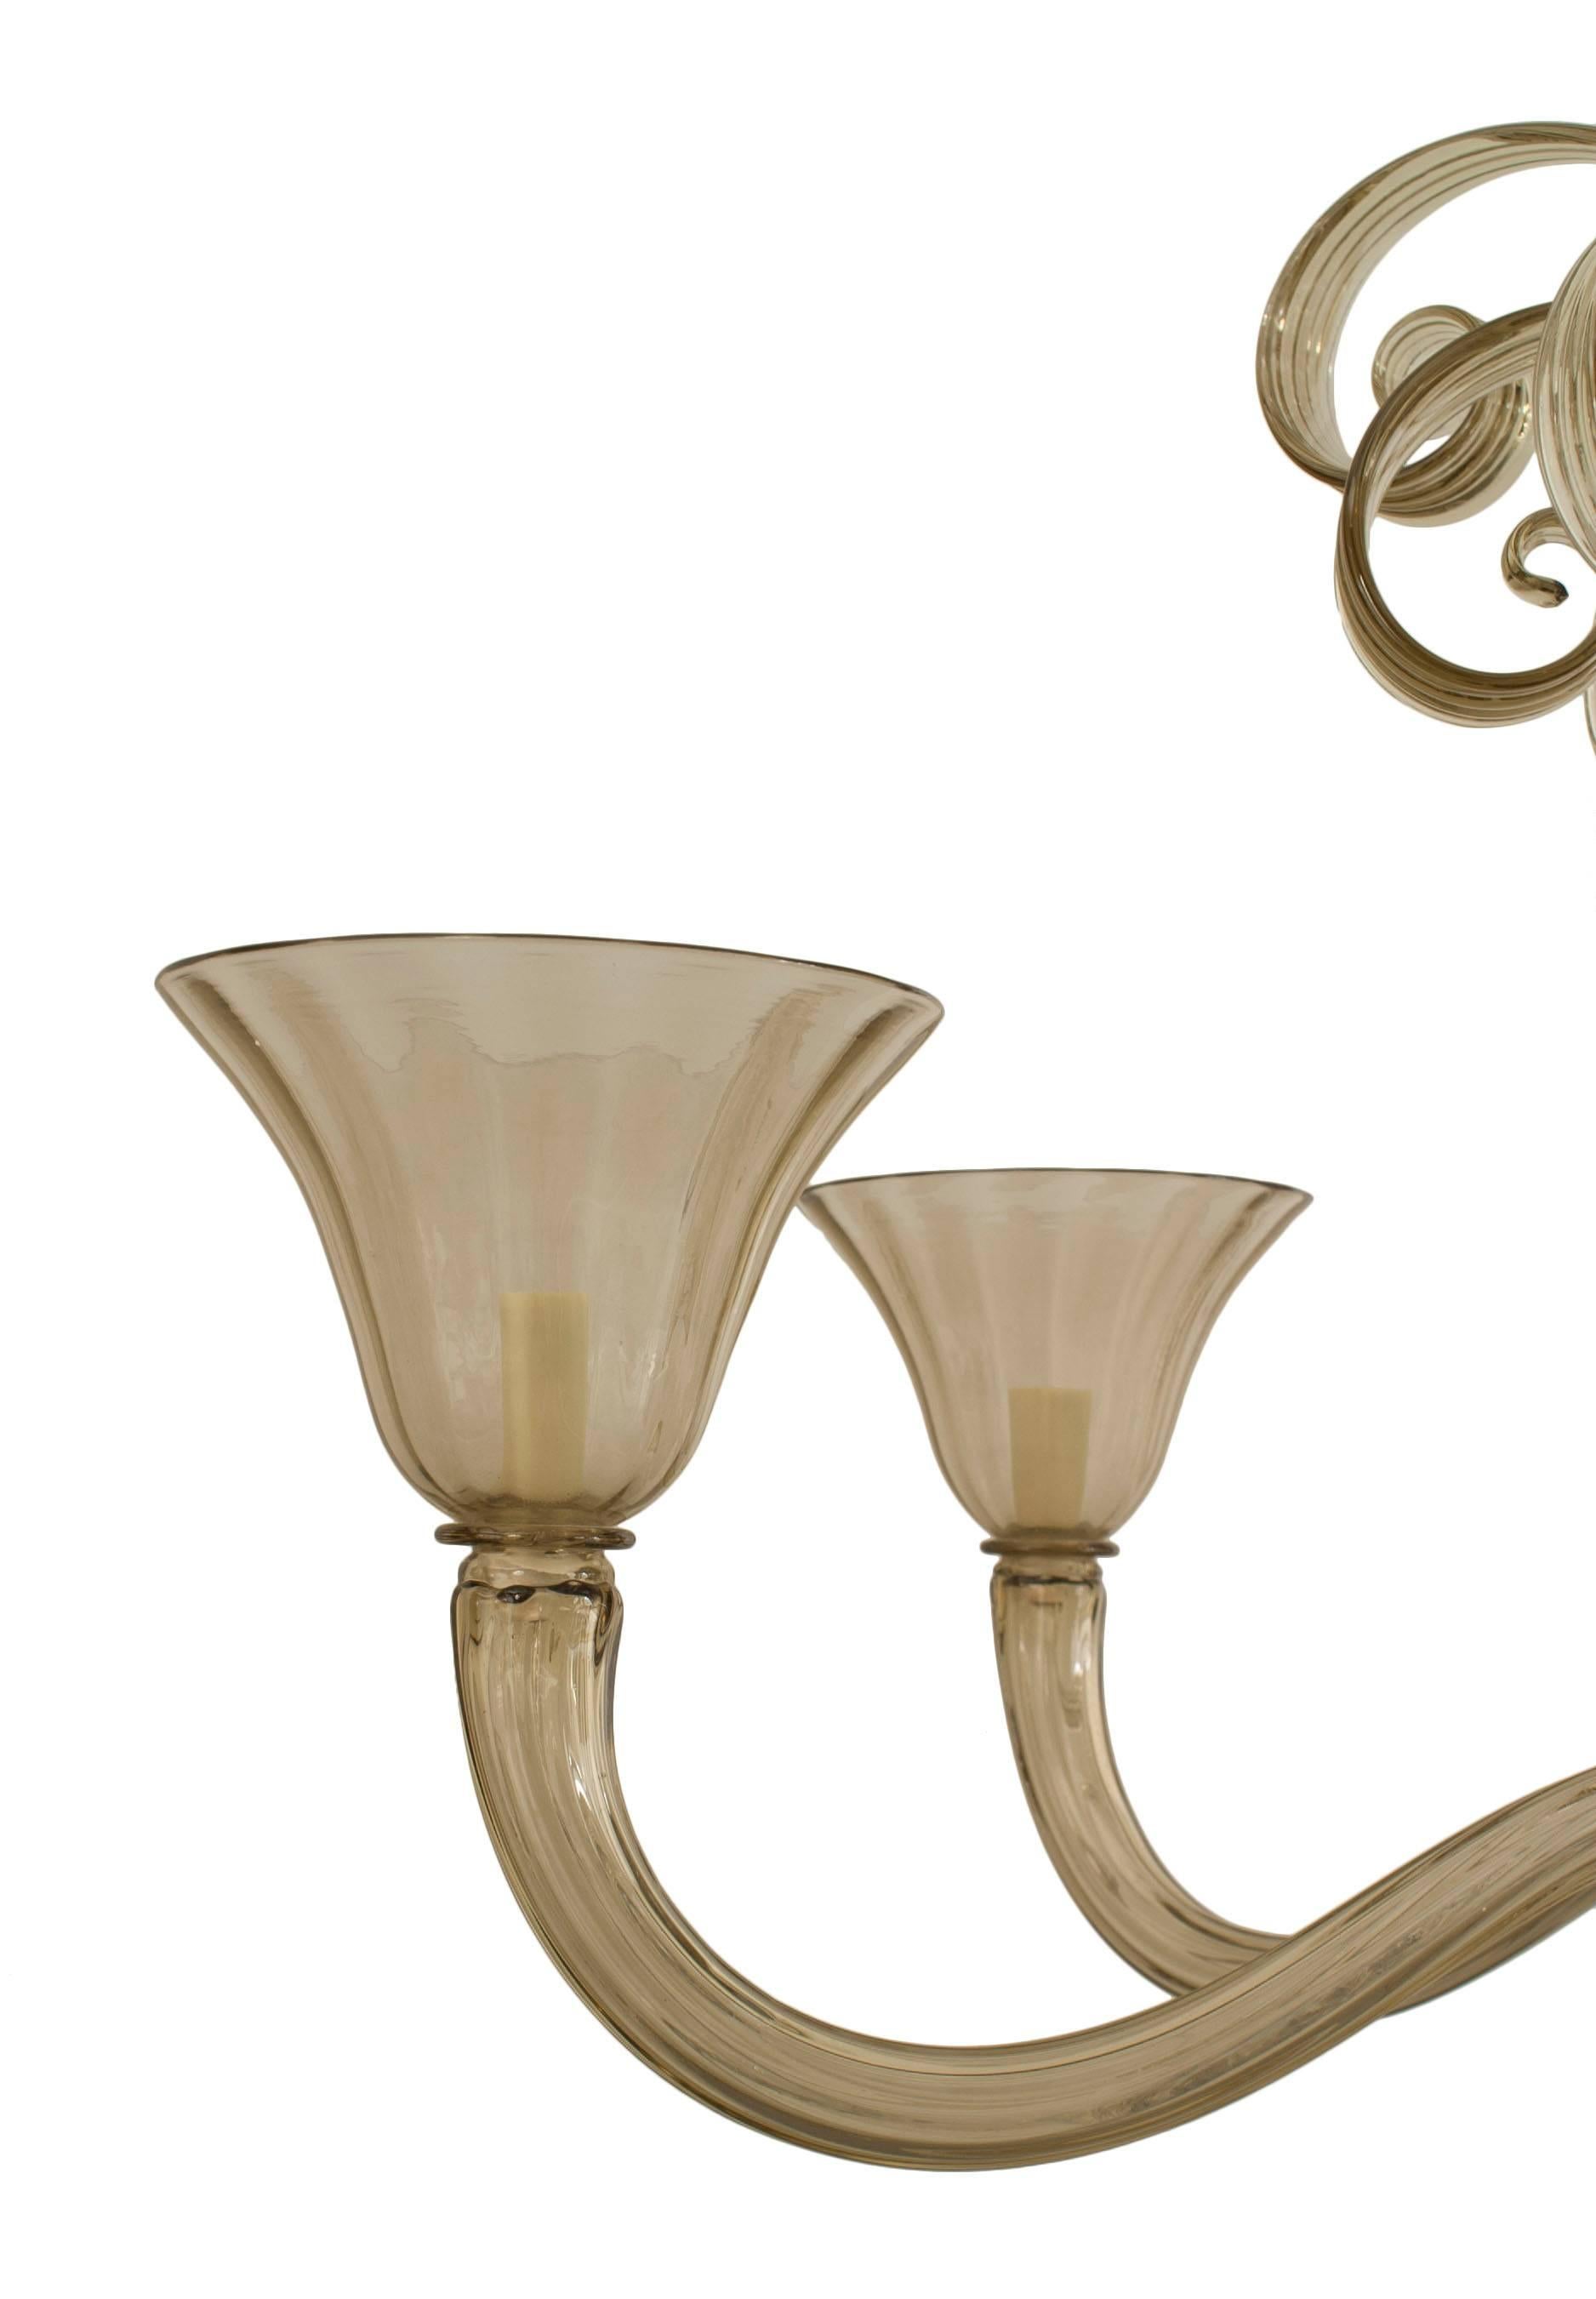 20th Century Italian Venetian Murano Smoked Glass Chandelier For Sale